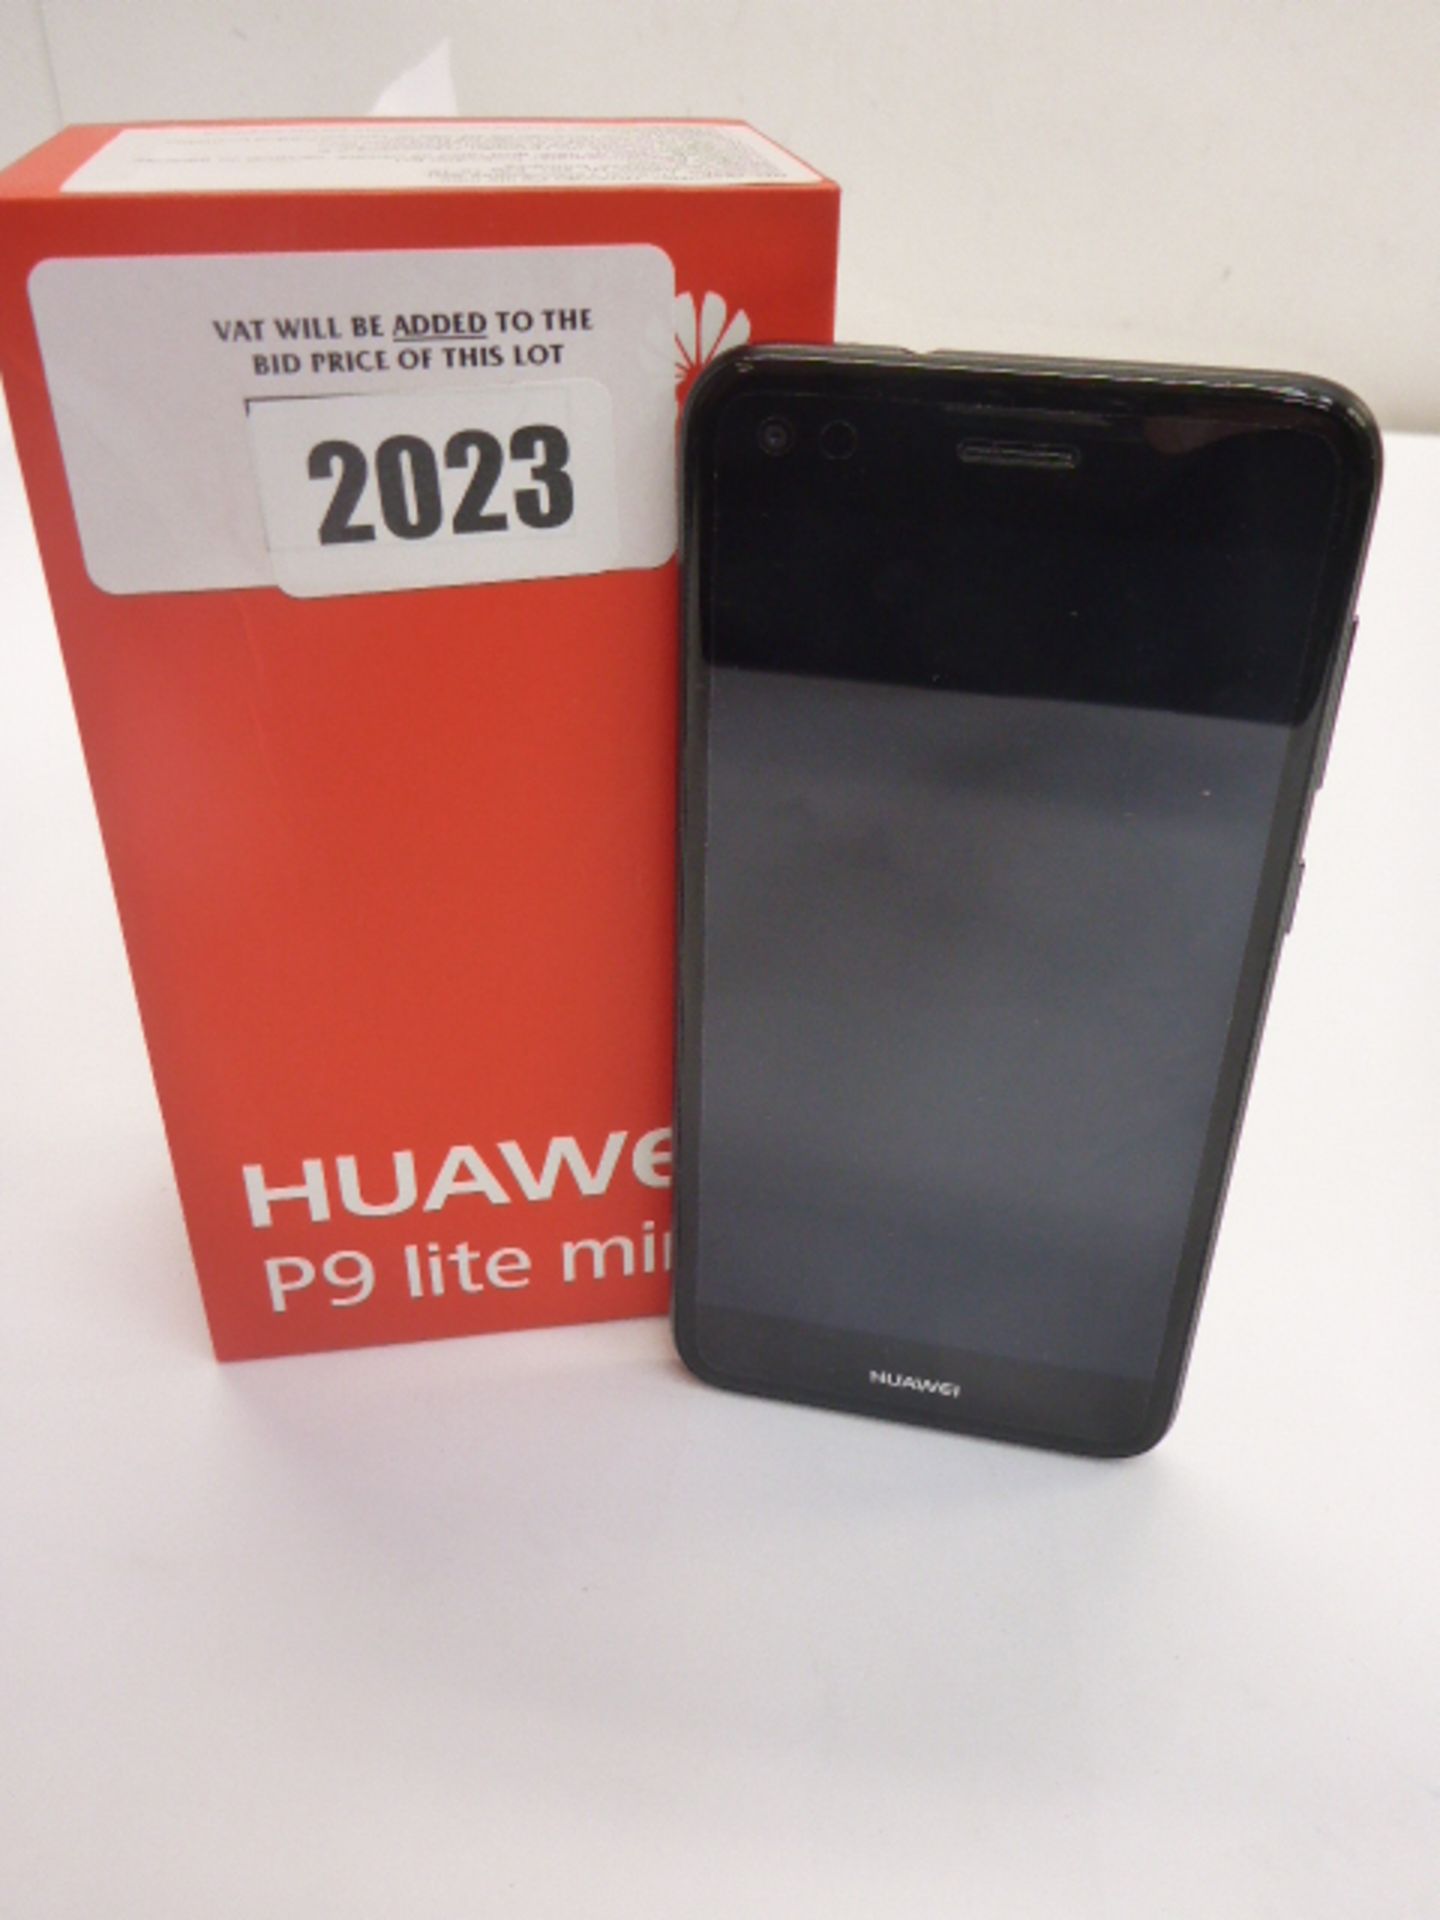 Huawei P9 lite mini Android Mobile Dual sim, 16GB storage with box.